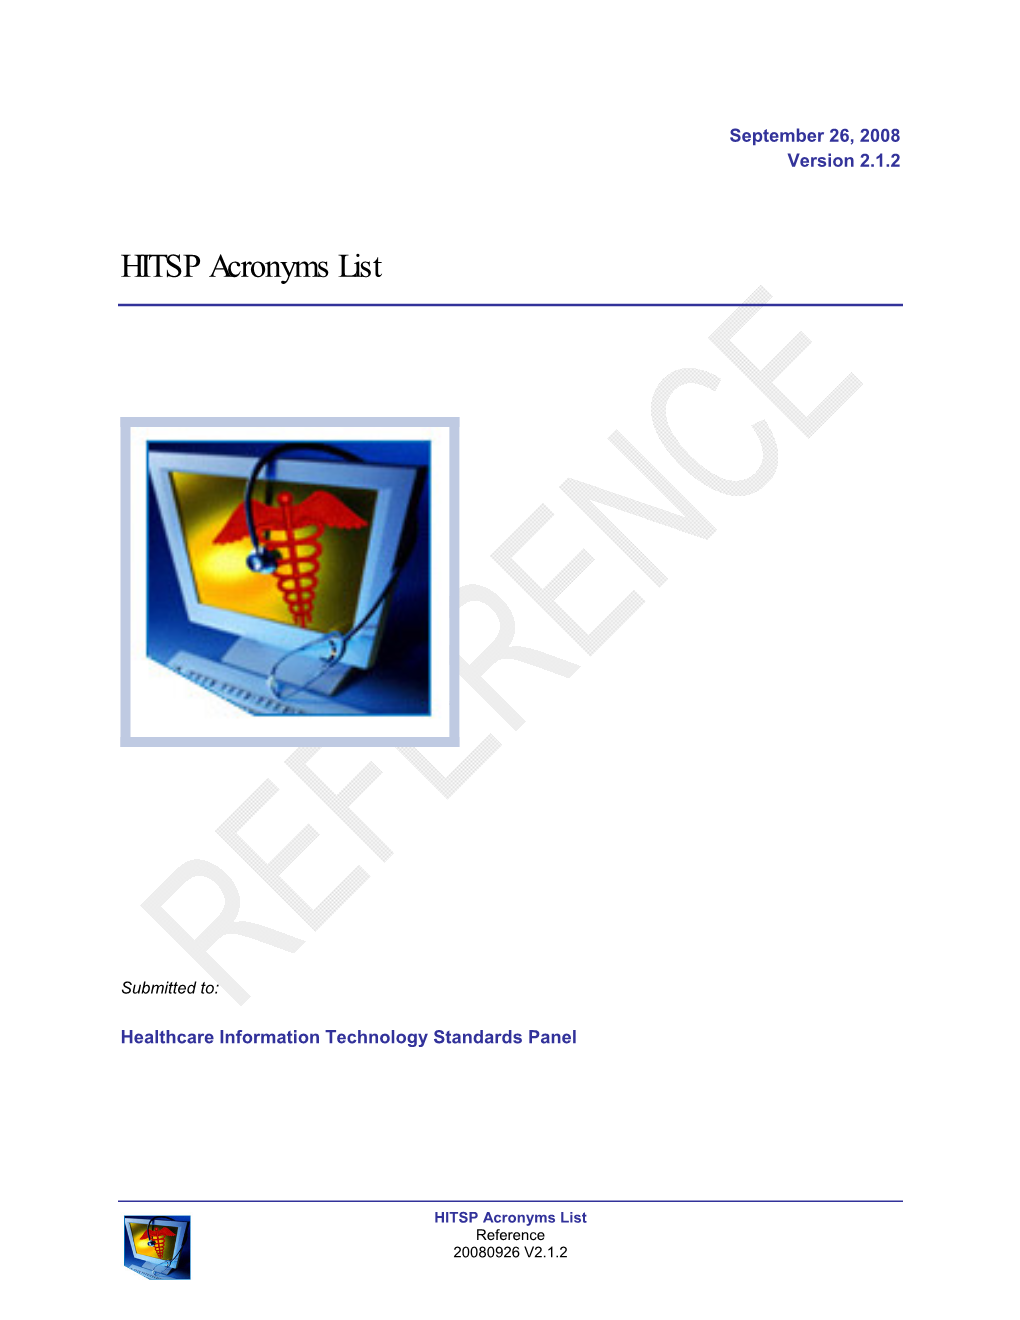 HITSP Reference Acronym List